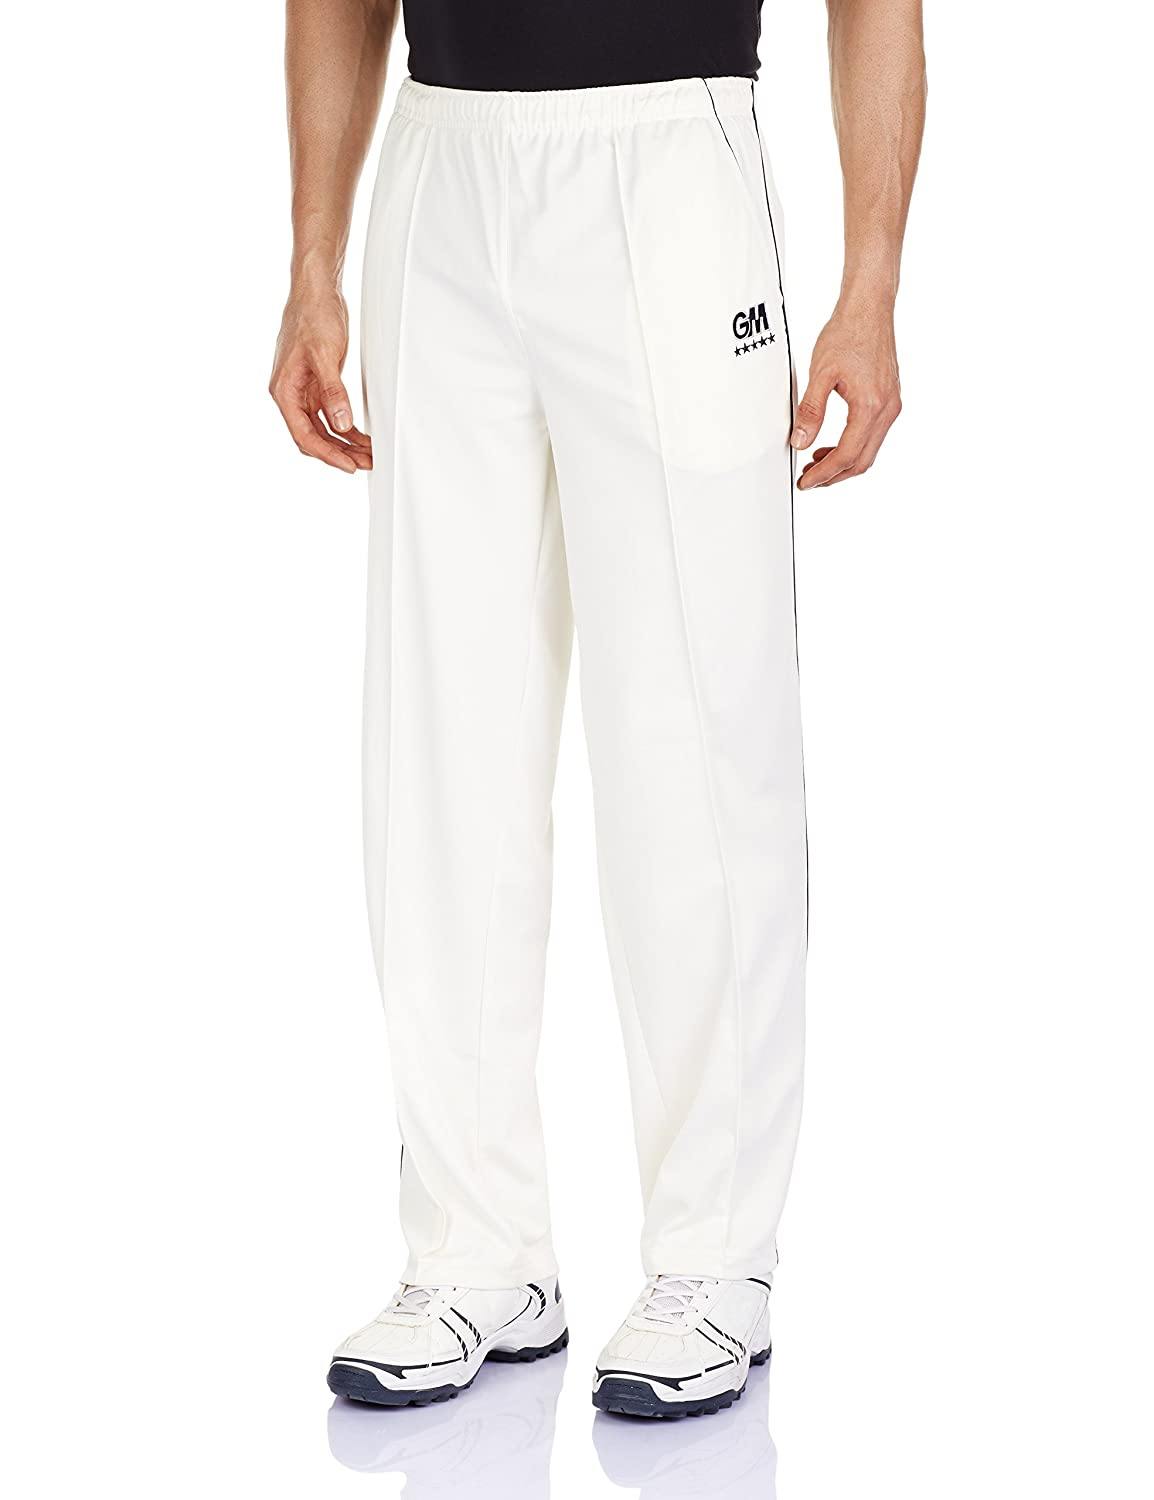 GM 7130 Cricket Trouser - Best Price online Prokicksports.com